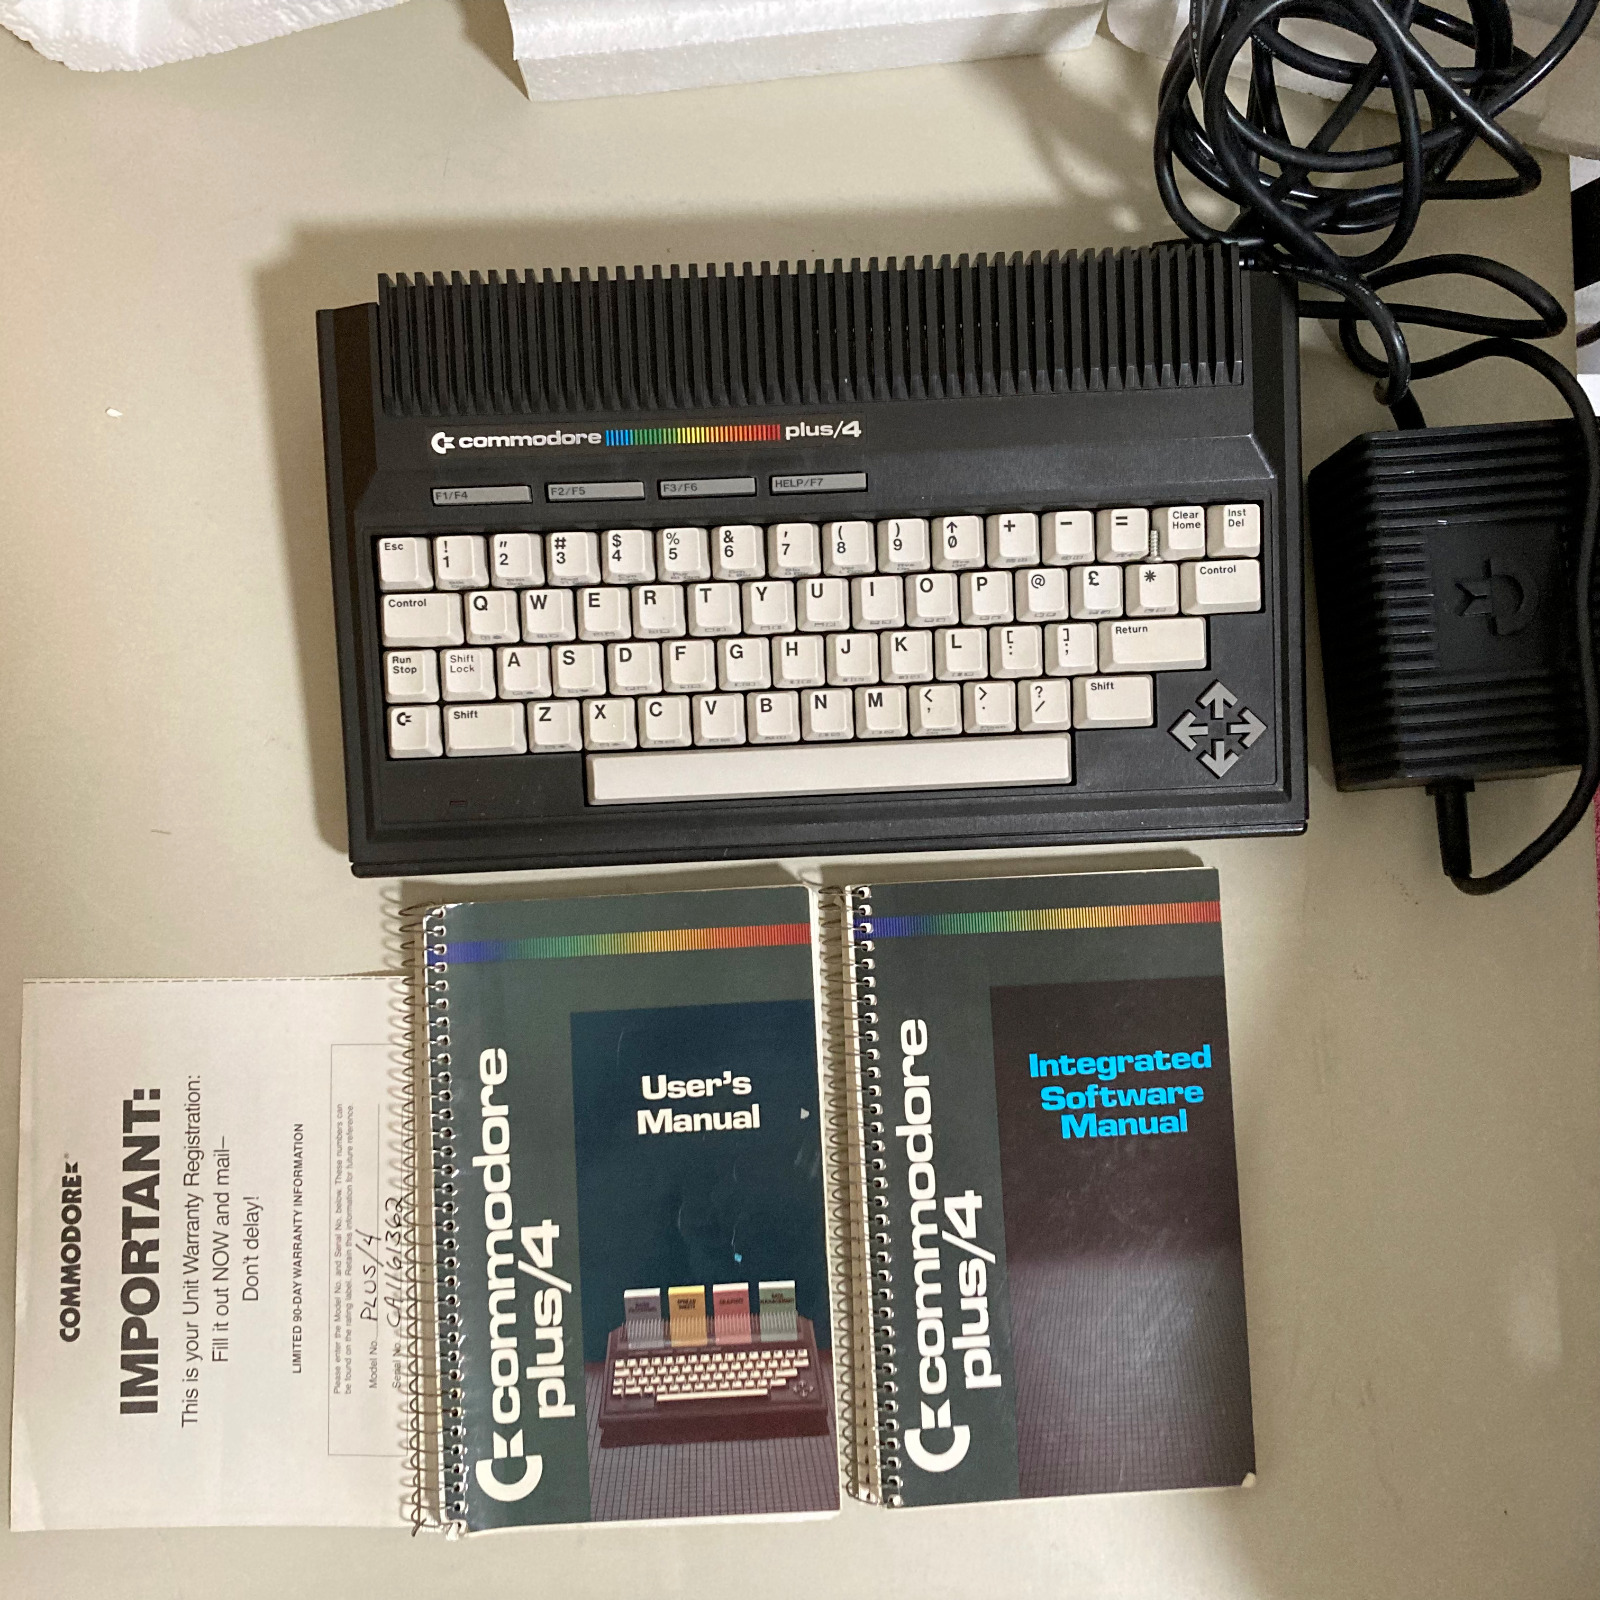 Commodore Plus 4 Computer Original Box w/manuals and power supply